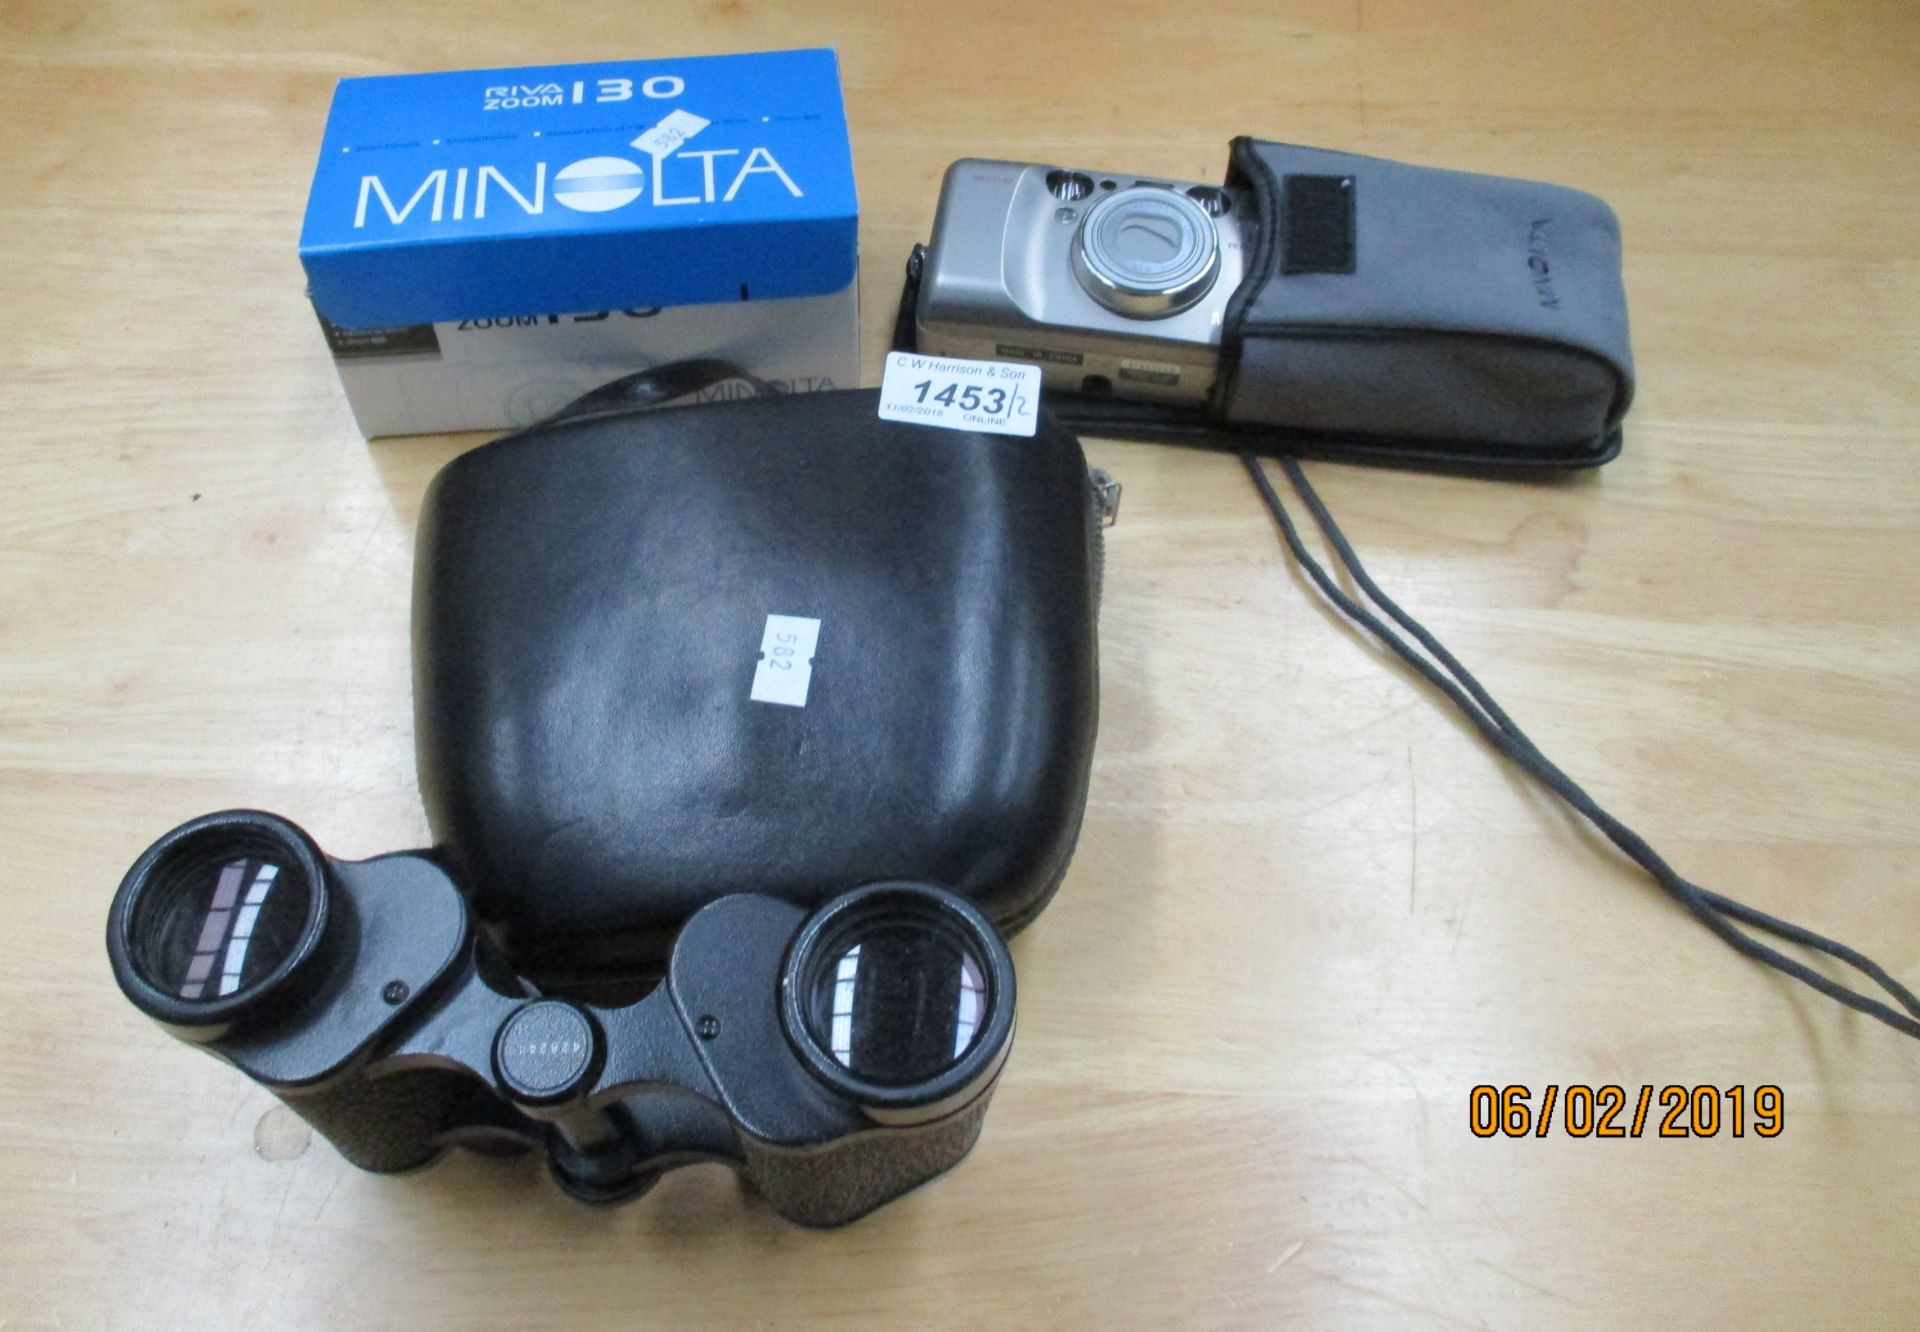 A pair of Carl Zeiss Jena Deltrinem 8x30 binoculars and a Minolta Riva Zoom 130 camera (2)